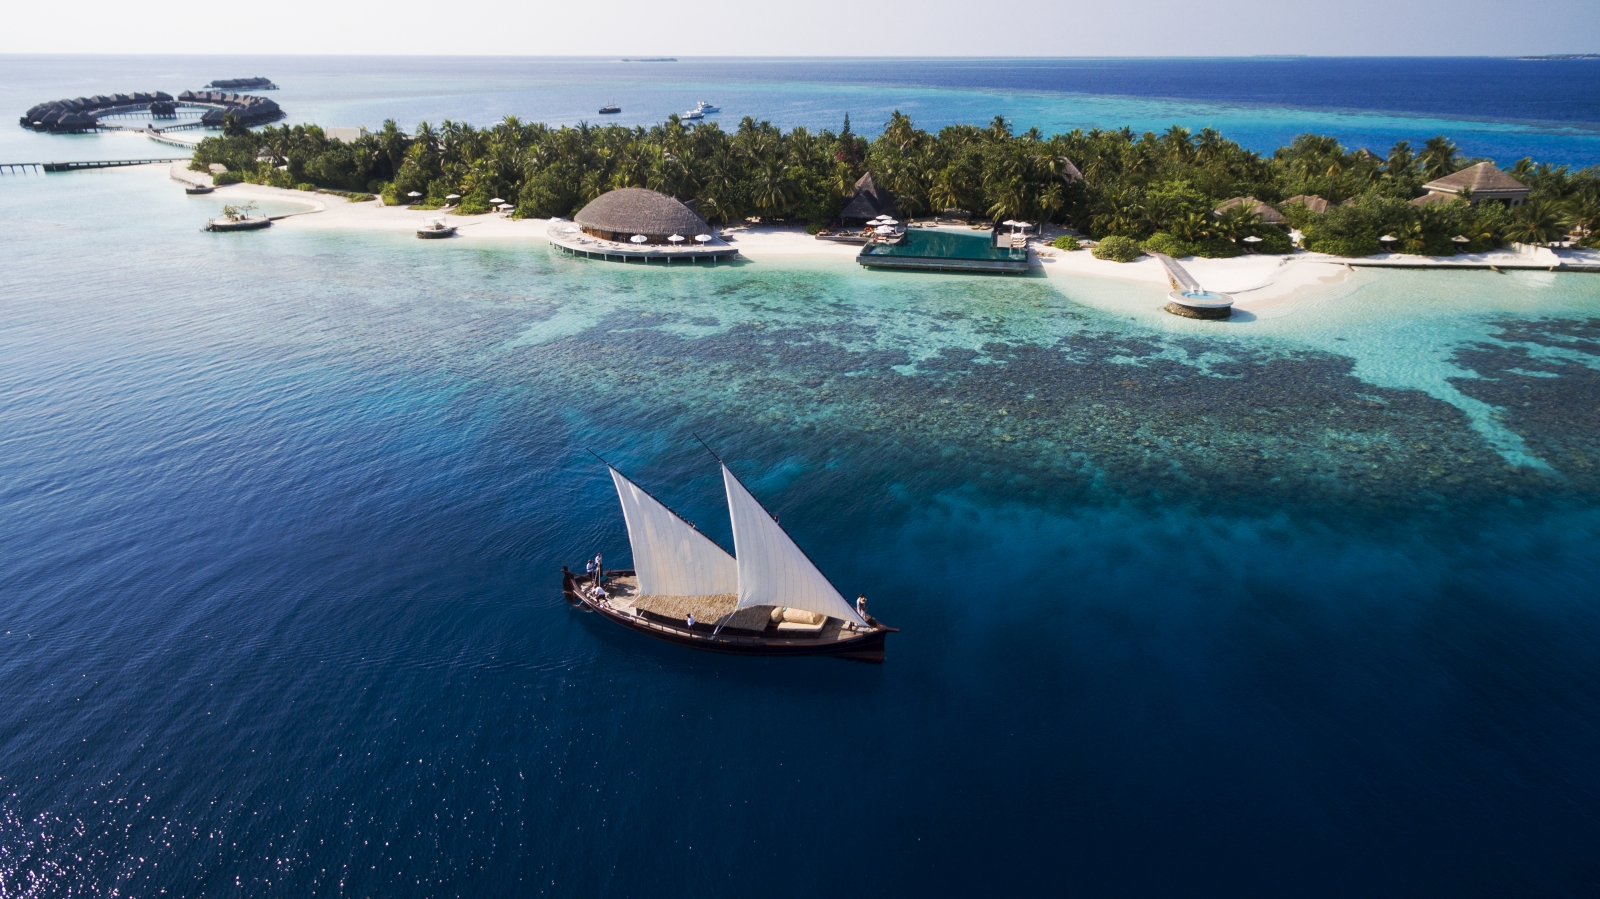 Traditional Dhoni sailing past luxury resort Huvafen Fushi in the Maldives